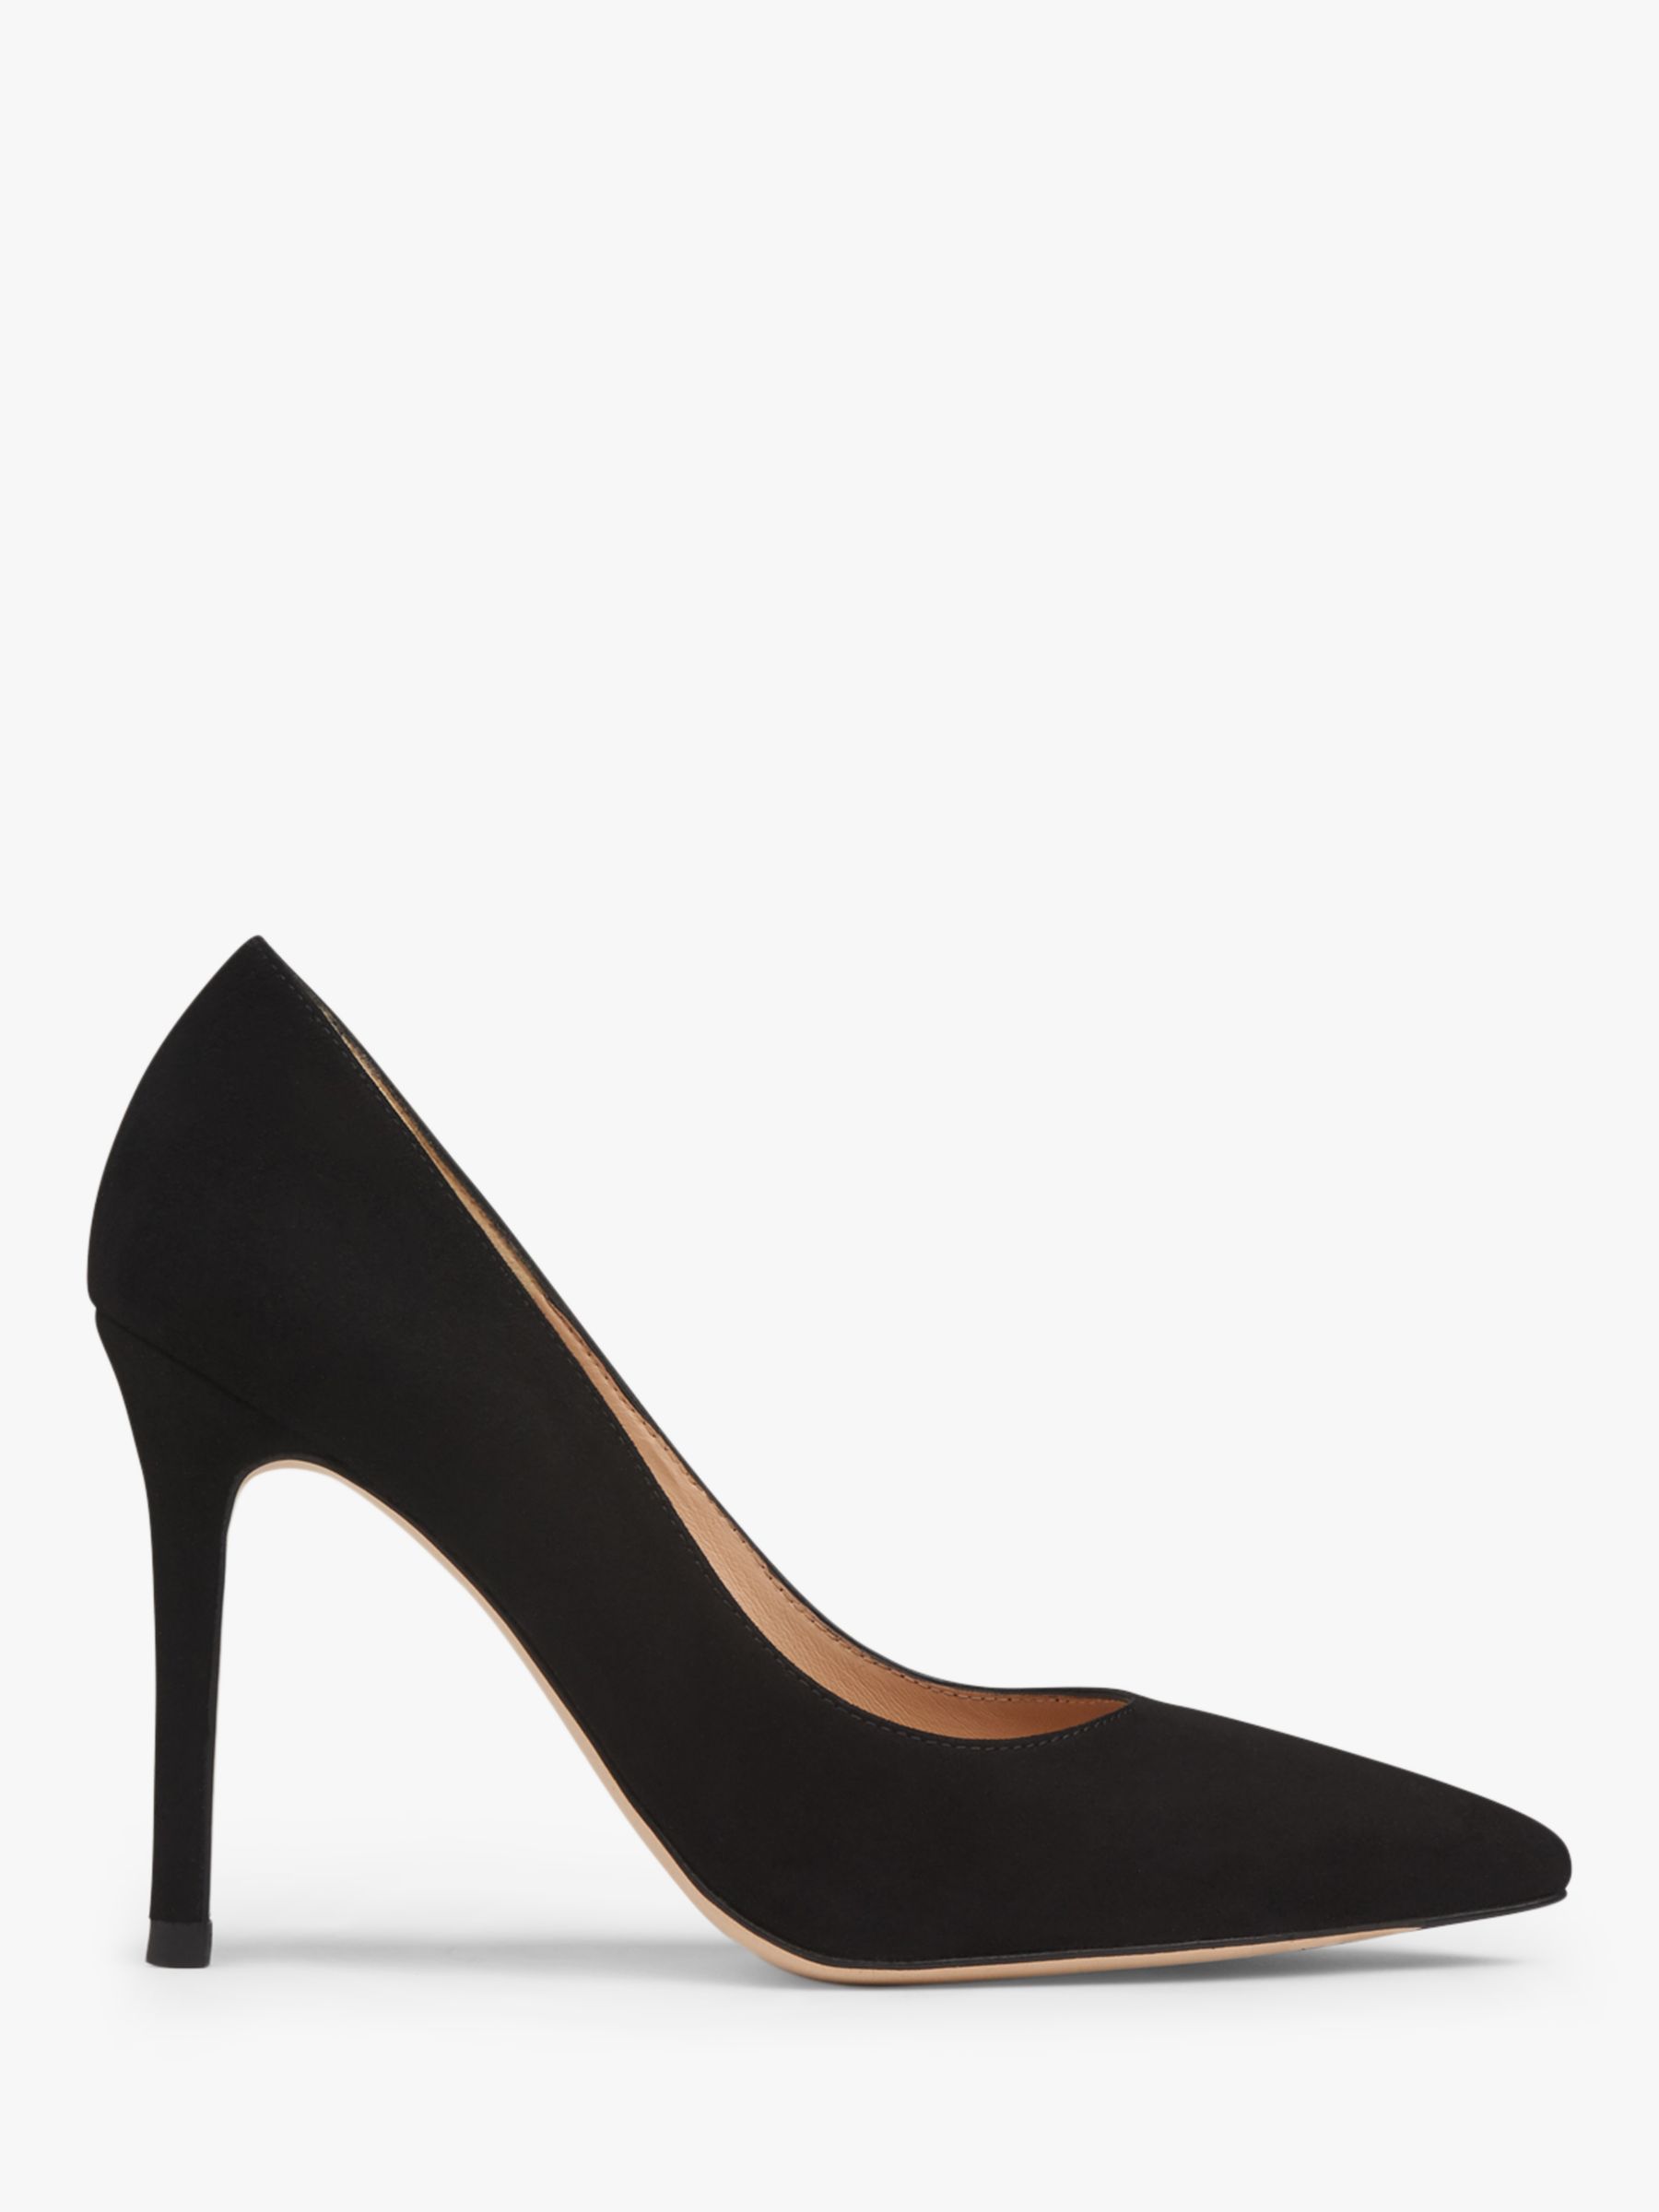 L.K.Bennett Fern Court Shoes, Black Suede, 3